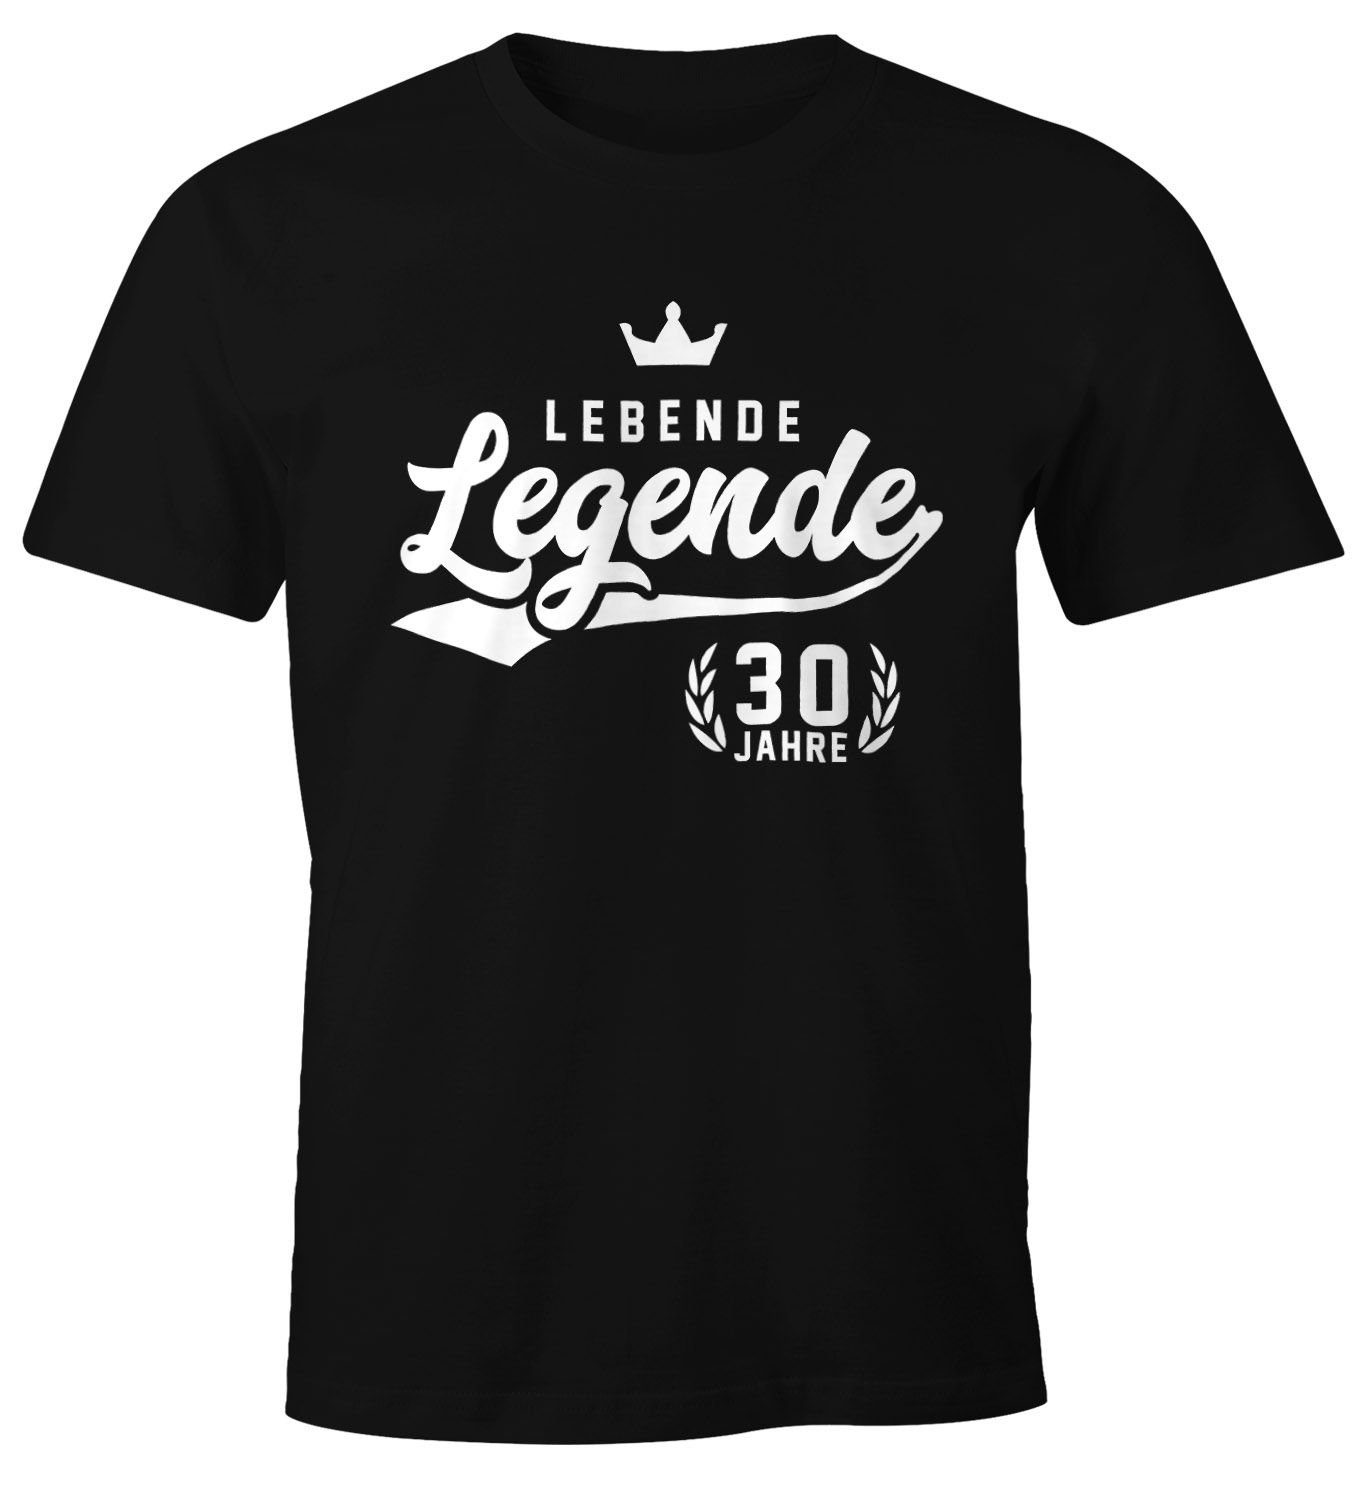 Object]. Athletic Print-Shirt Geburtstag mit Legende [object T-Shirt Fun-Shirt Moonworks® 30 Lebende schwarz MoonWorks Print Krone Herren